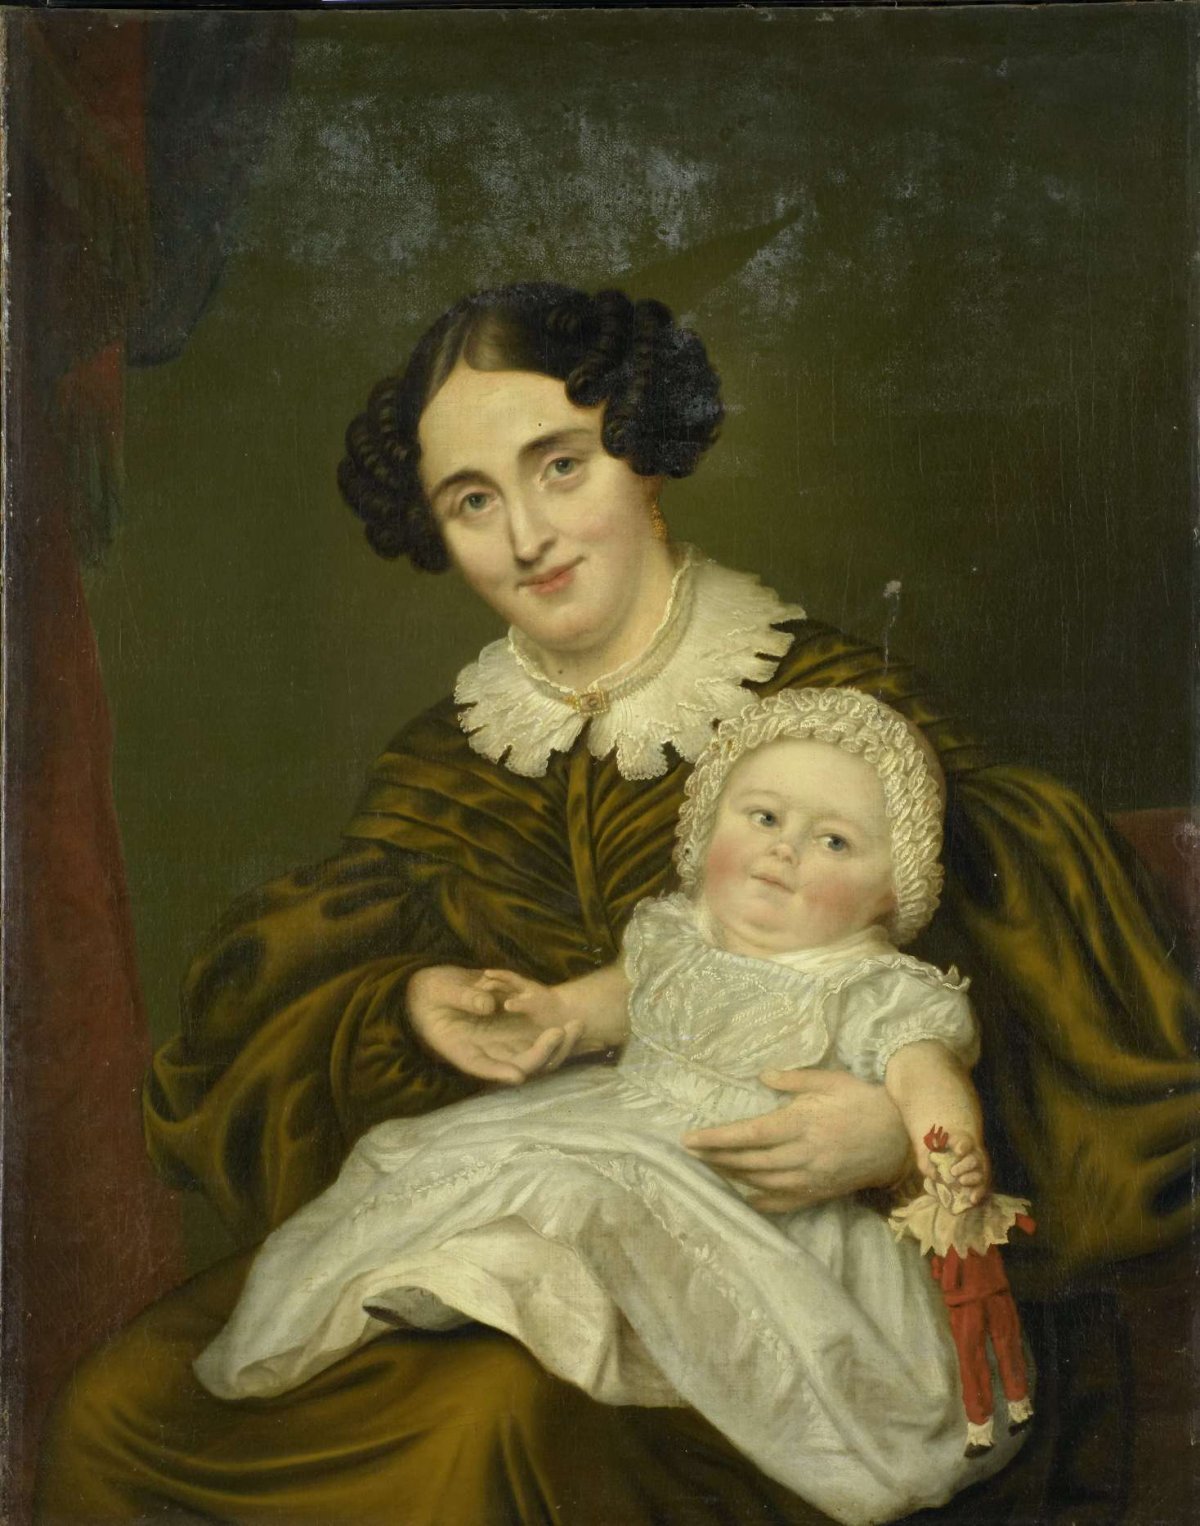 Double portrait of a woman, probably Johanna Gesiena van Demmeltraadt (1804-1878), wife of Jan Hendrik Carp (1788-1845) and her son Clemens Johan (1834-1889) or daughter Anna Johanna (1842-1901), Louis Moritz, 1835 - 1843